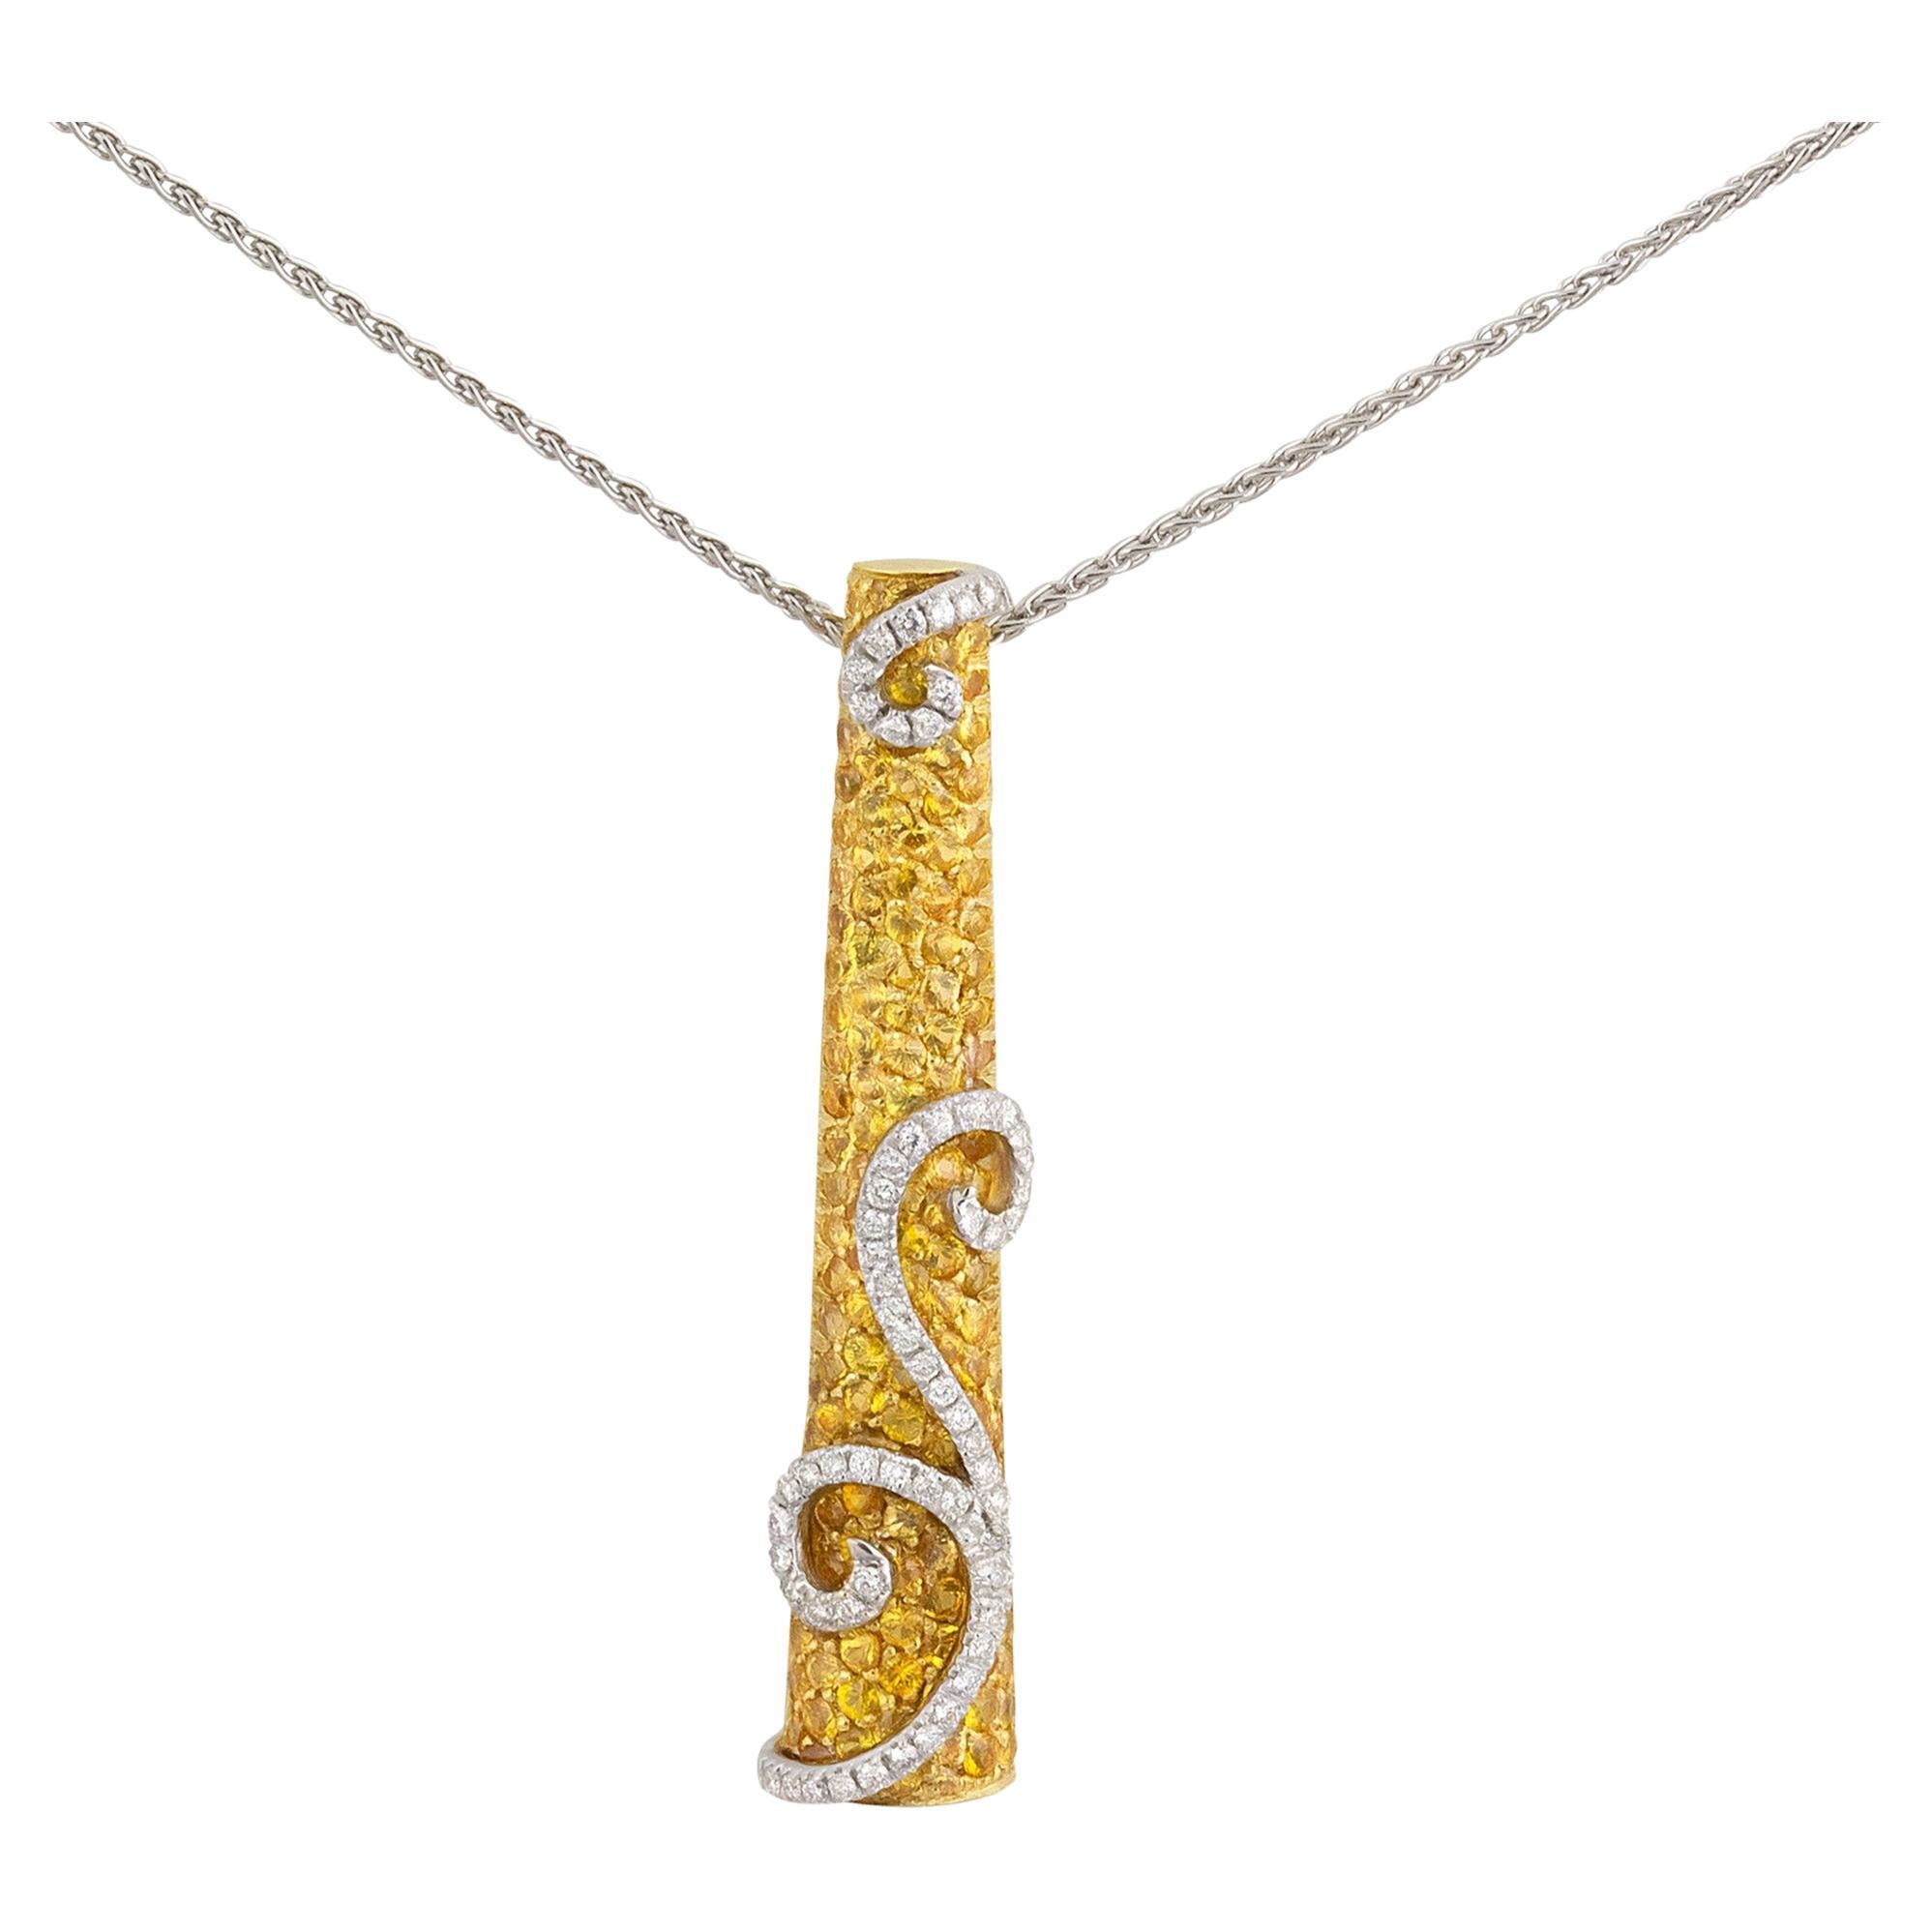 Stefan Hafner 18K Yellow & White Gold Diamond & Sapphire Pendant Necklace For Sale